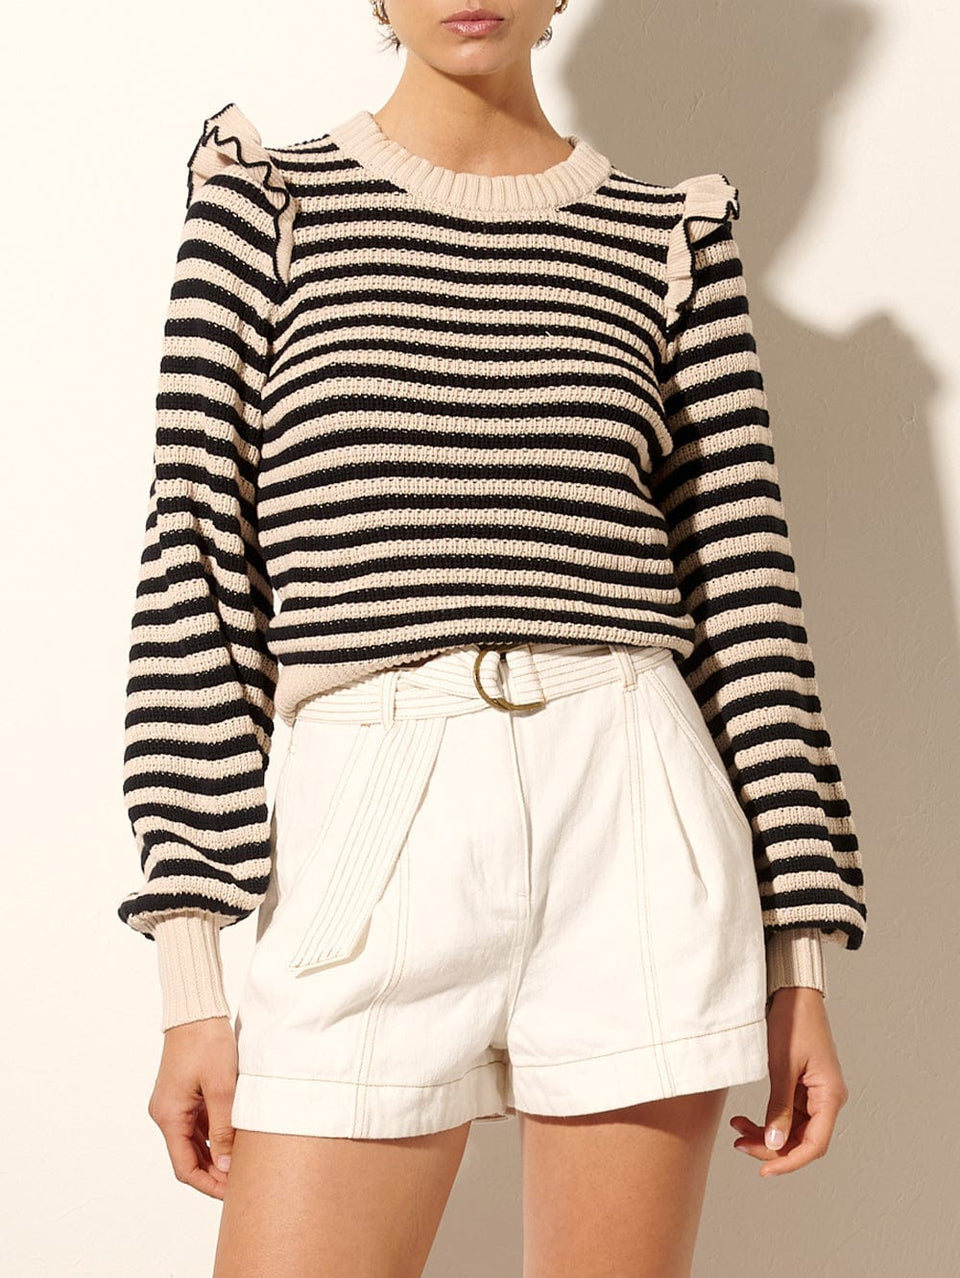 Anita Knit Top KIVARI | Model wears black and white striped knit jumper close up